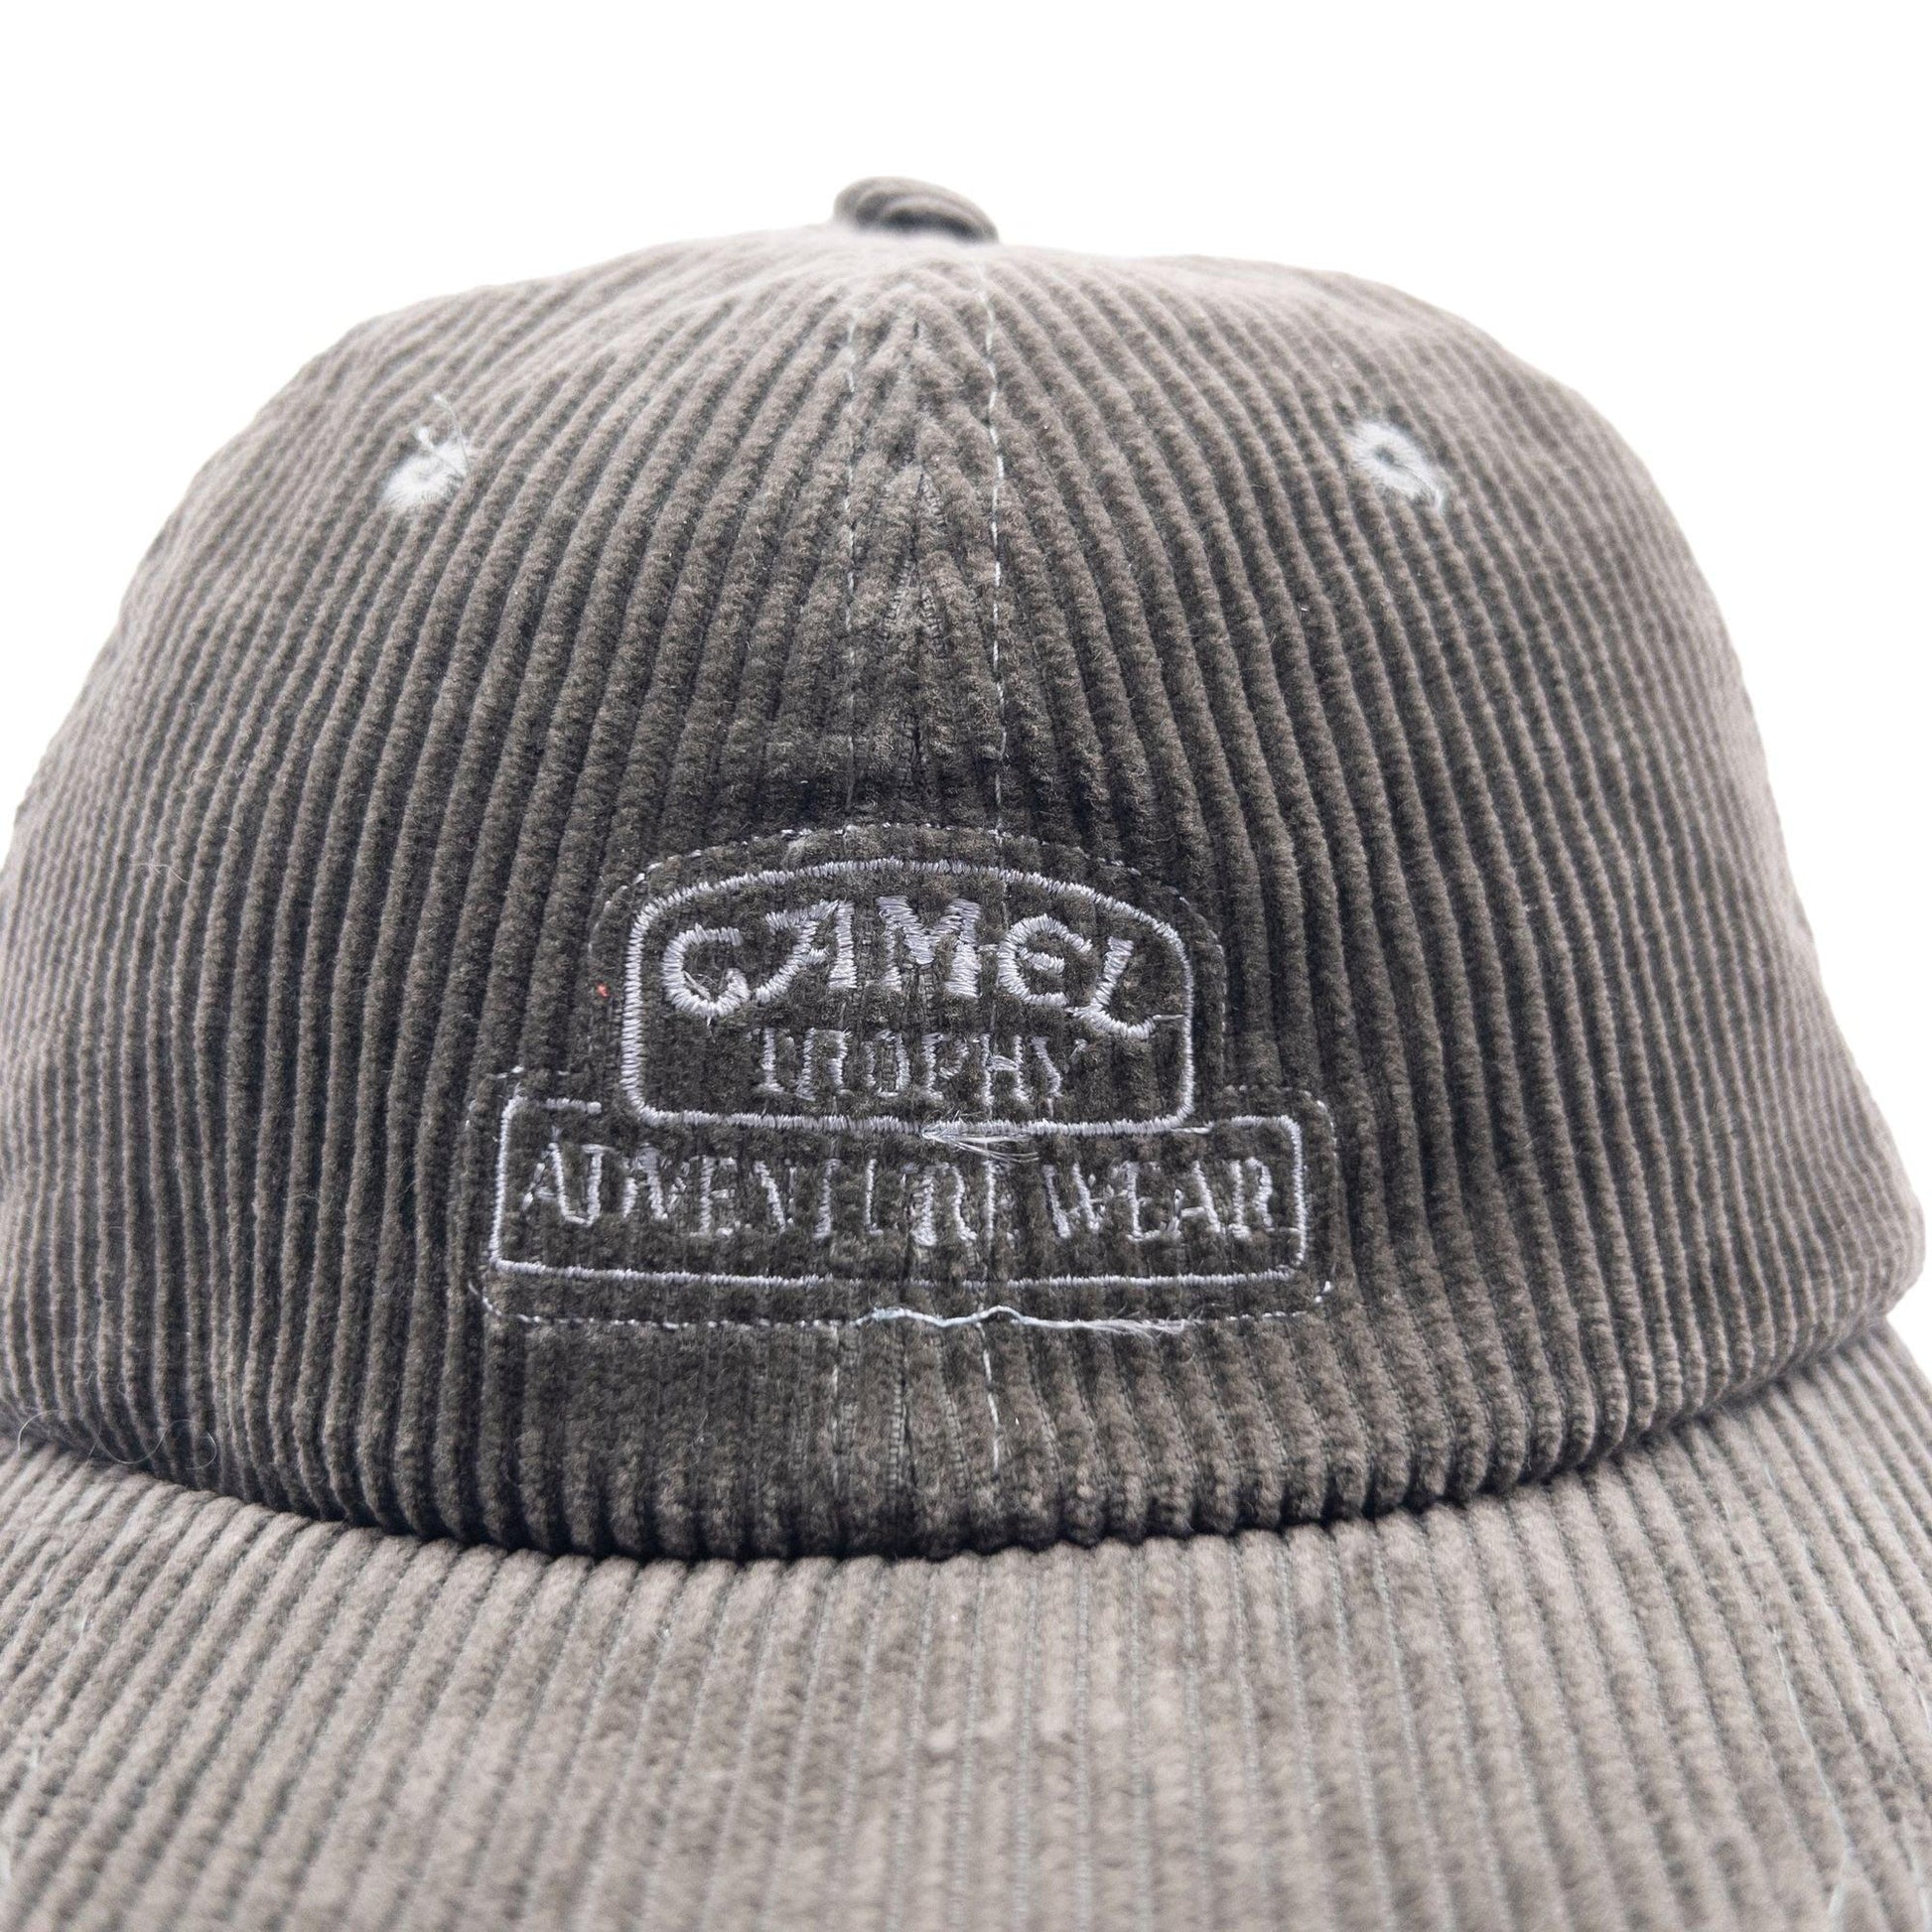 Vintage Camel Trophy Corduroy Hat - Known Source